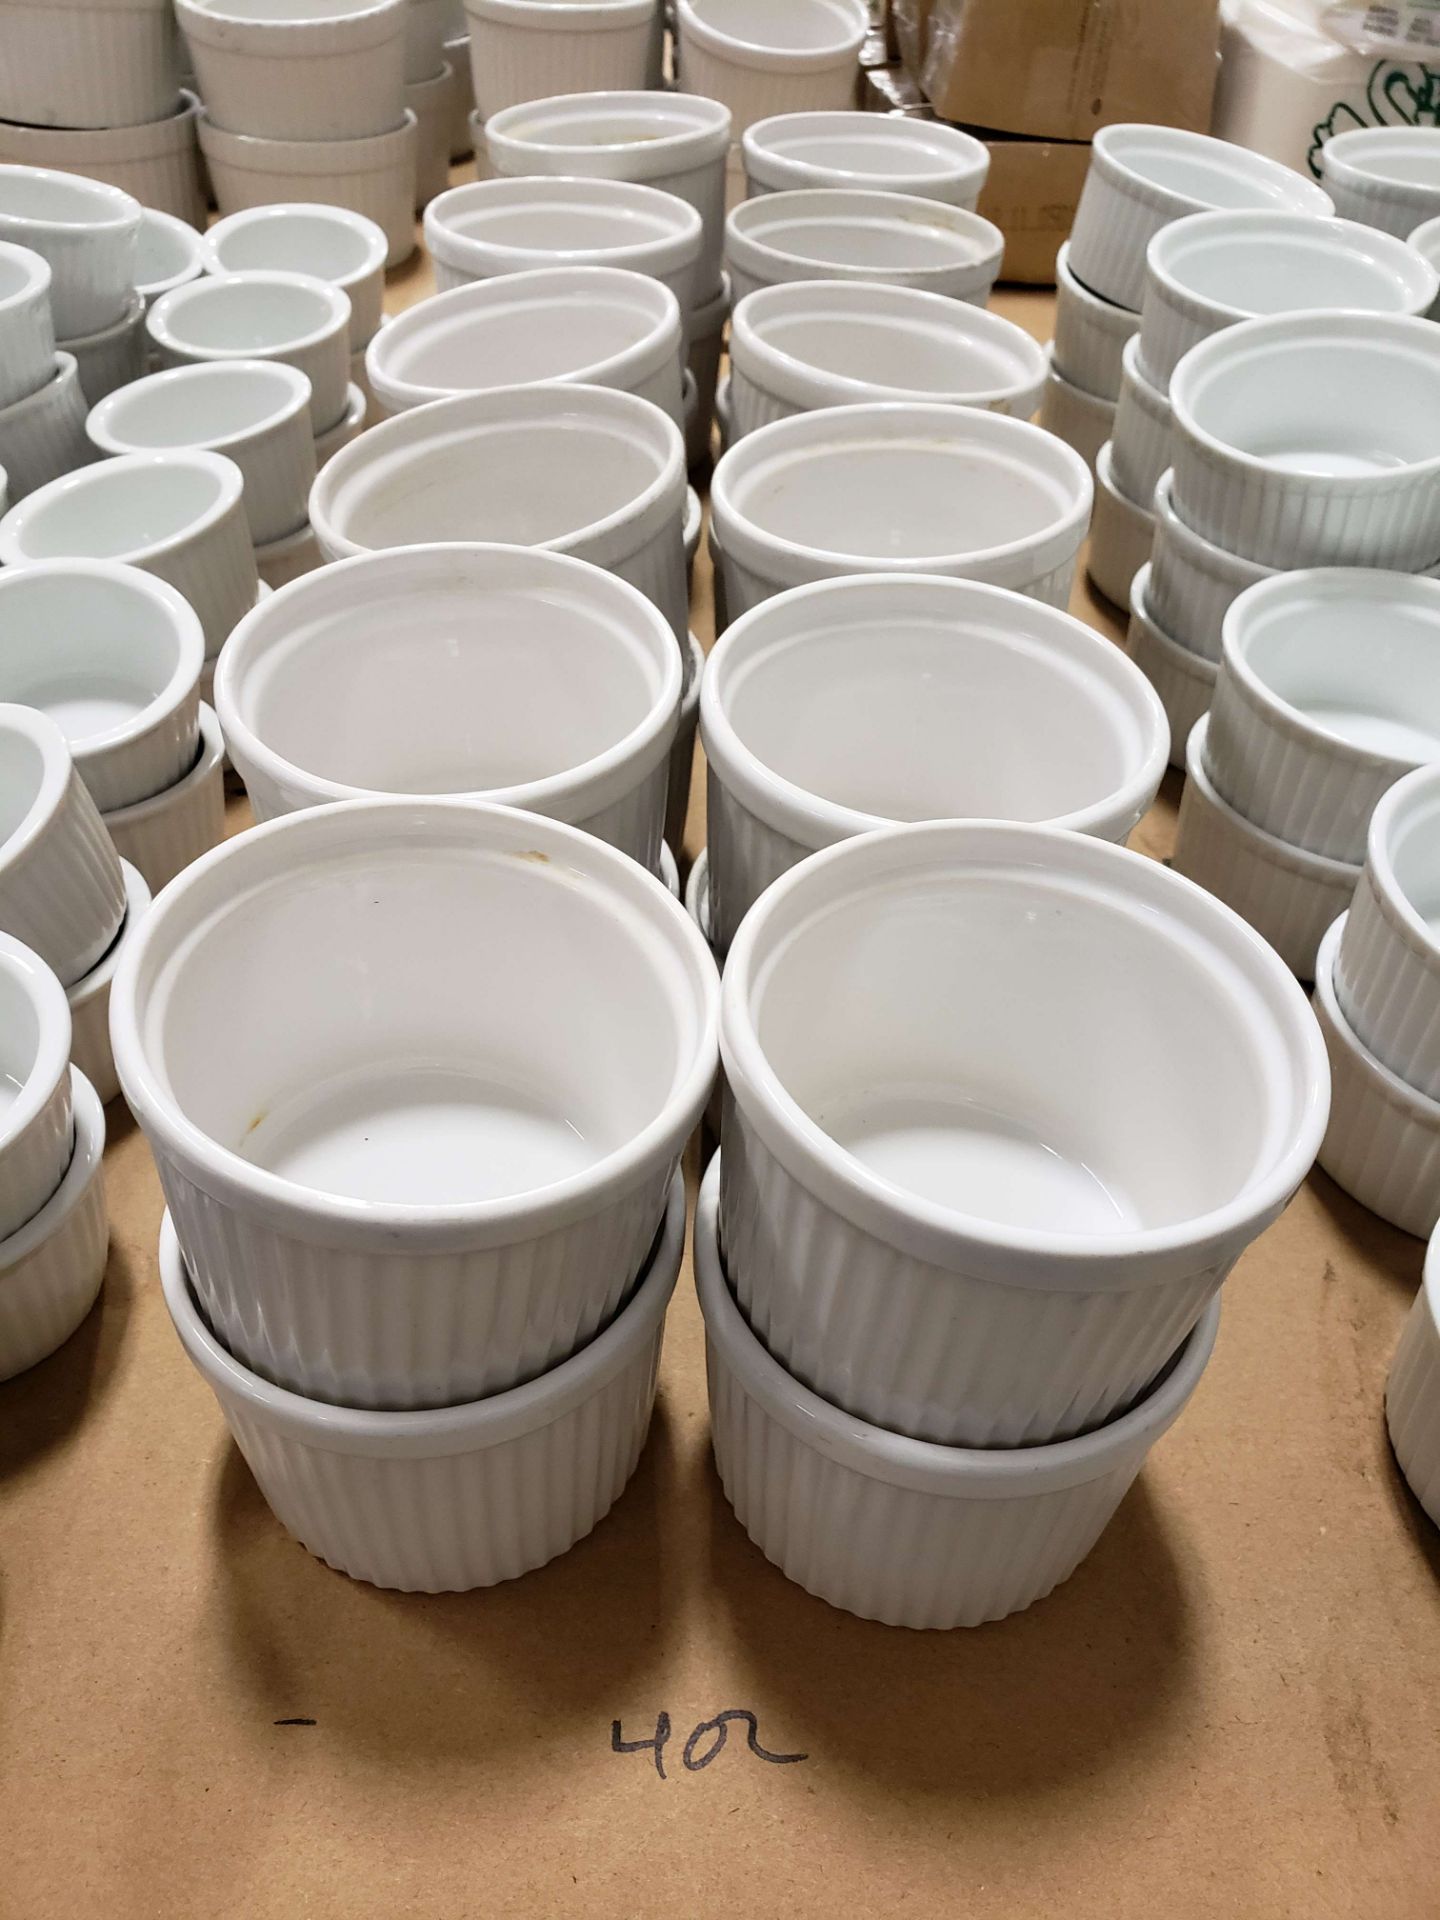 4 oz Ceramic White Ramekins - Lot of 24 - Image 2 of 2